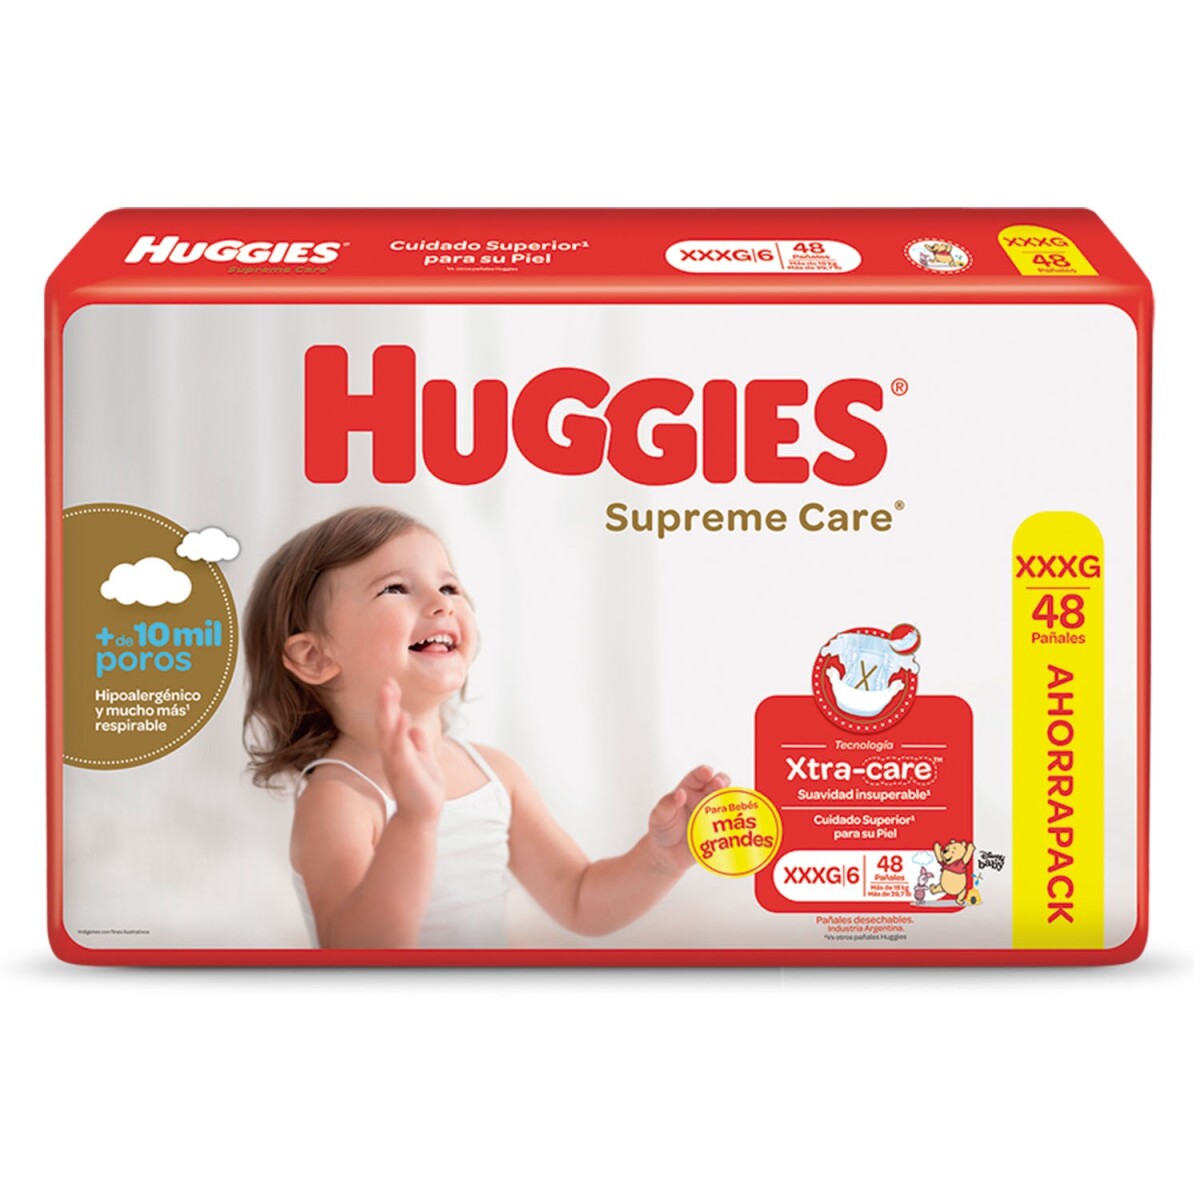 Huggies Supreme Care Xxxg 